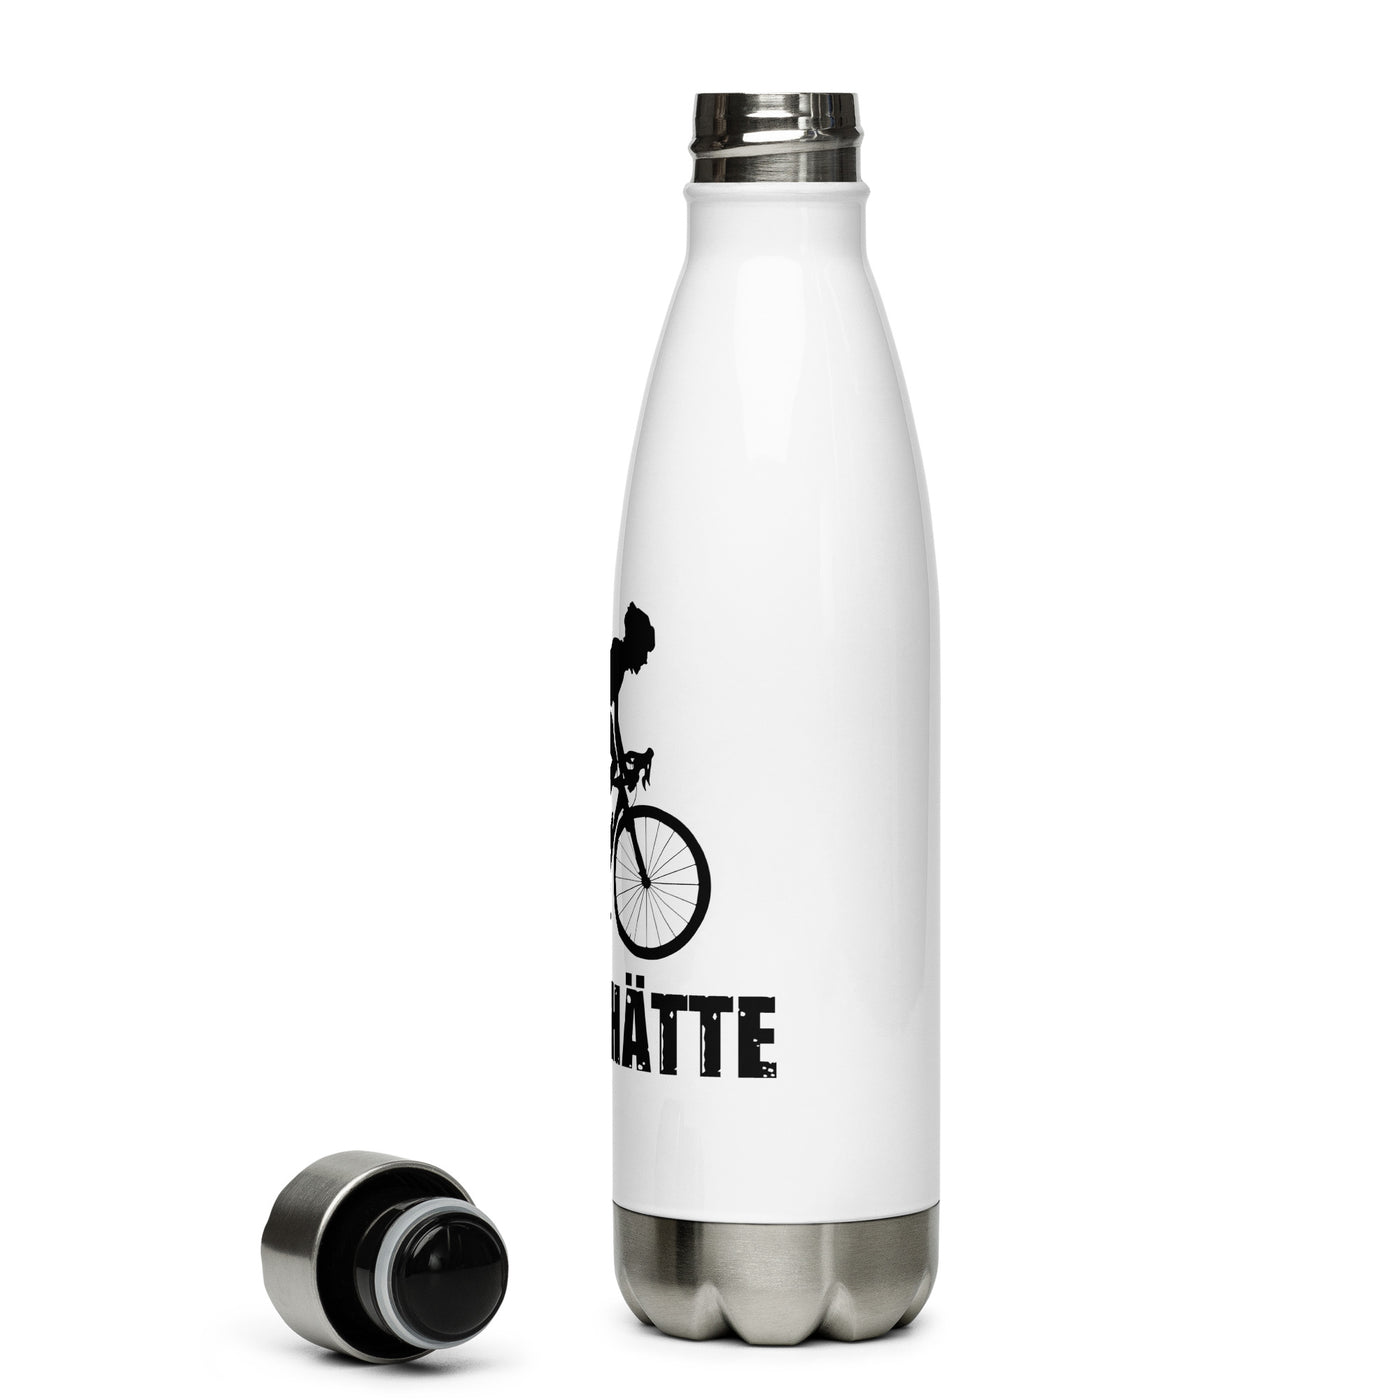 Hatte Hatte 2 - Edelstahl Trinkflasche fahrrad